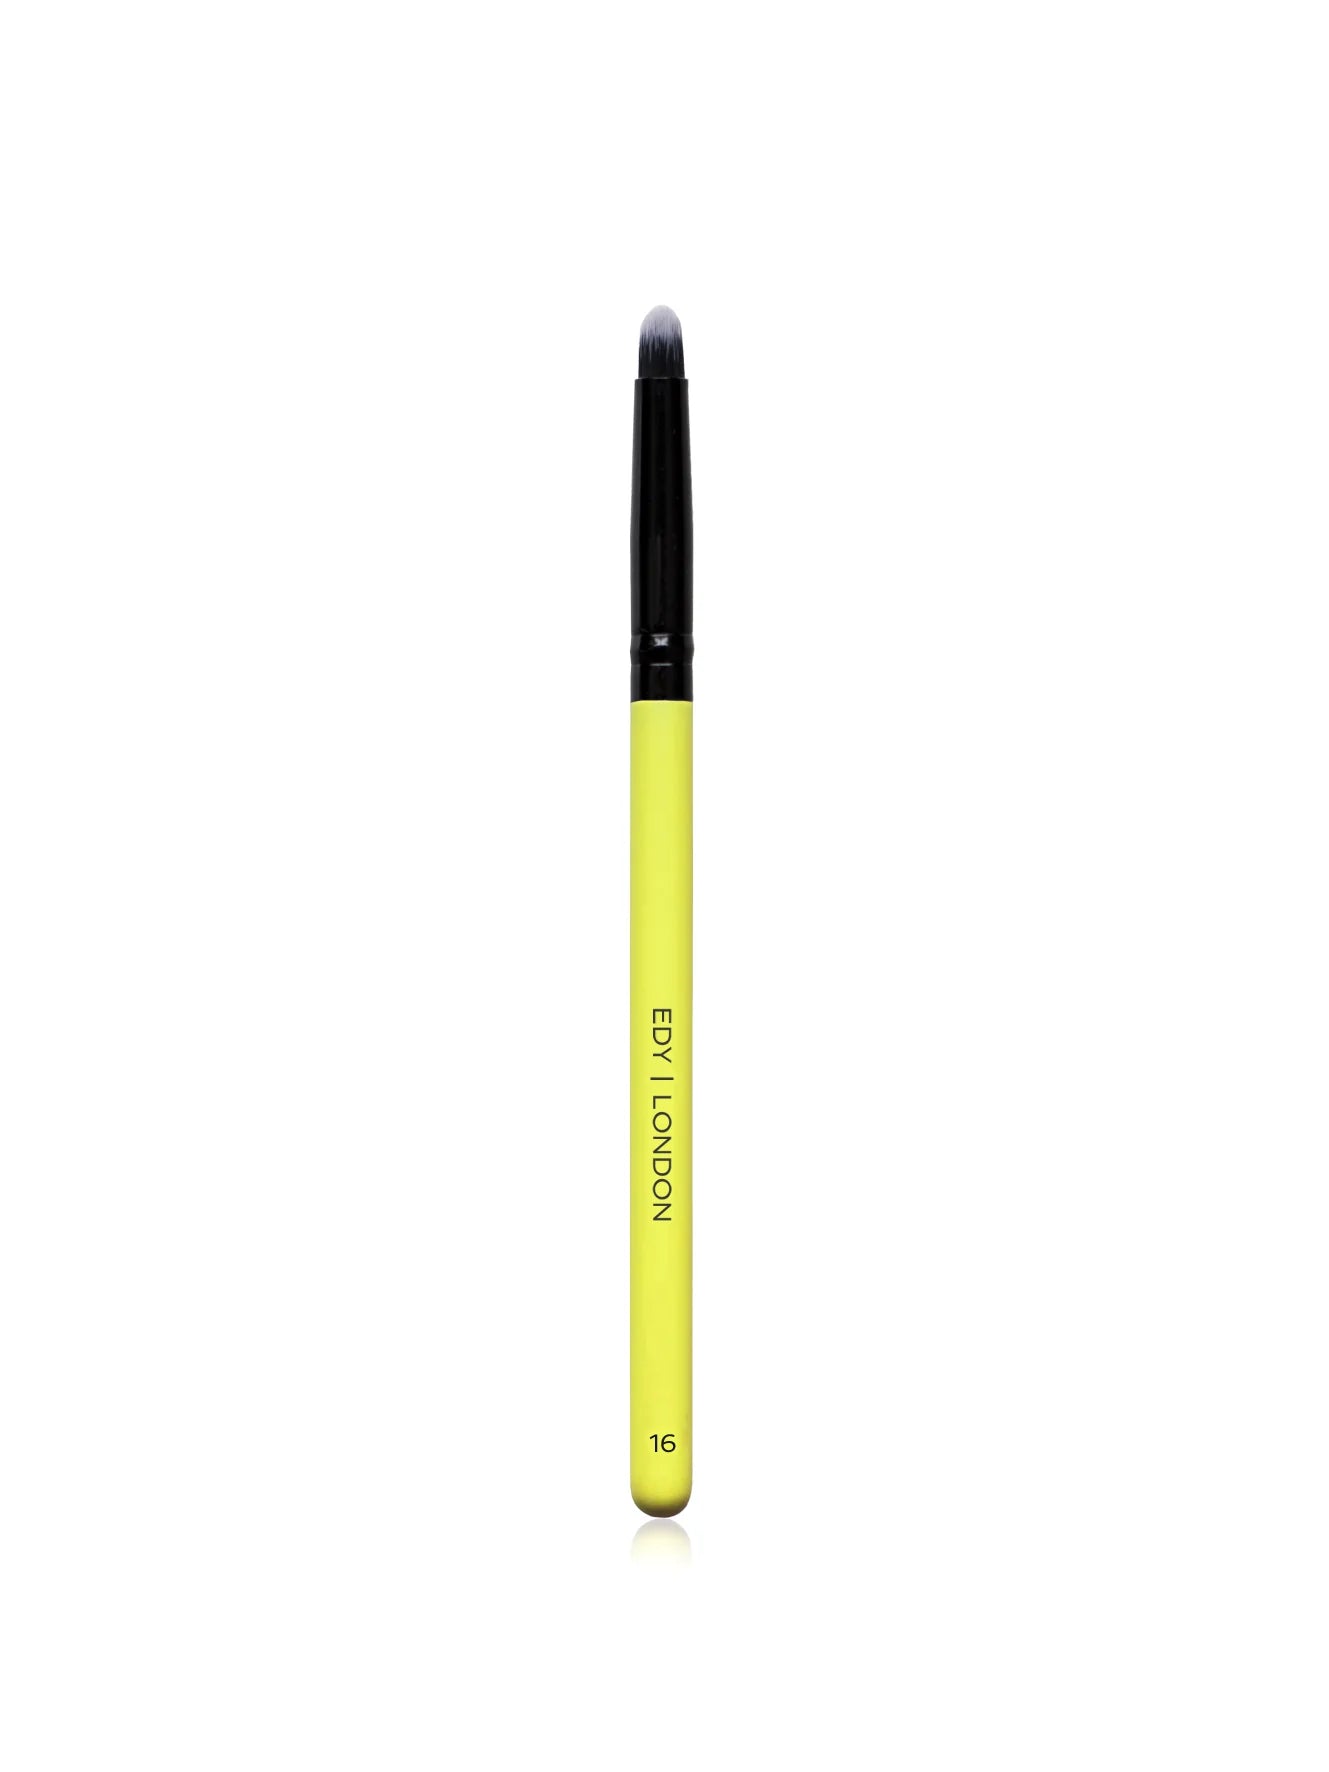 Small Pencil Brush 16 Make-up Brush EDY LONDON Lemon   - EDY LONDON PRODUCTS UK - The Best Makeup Brushes - shop.edy.london